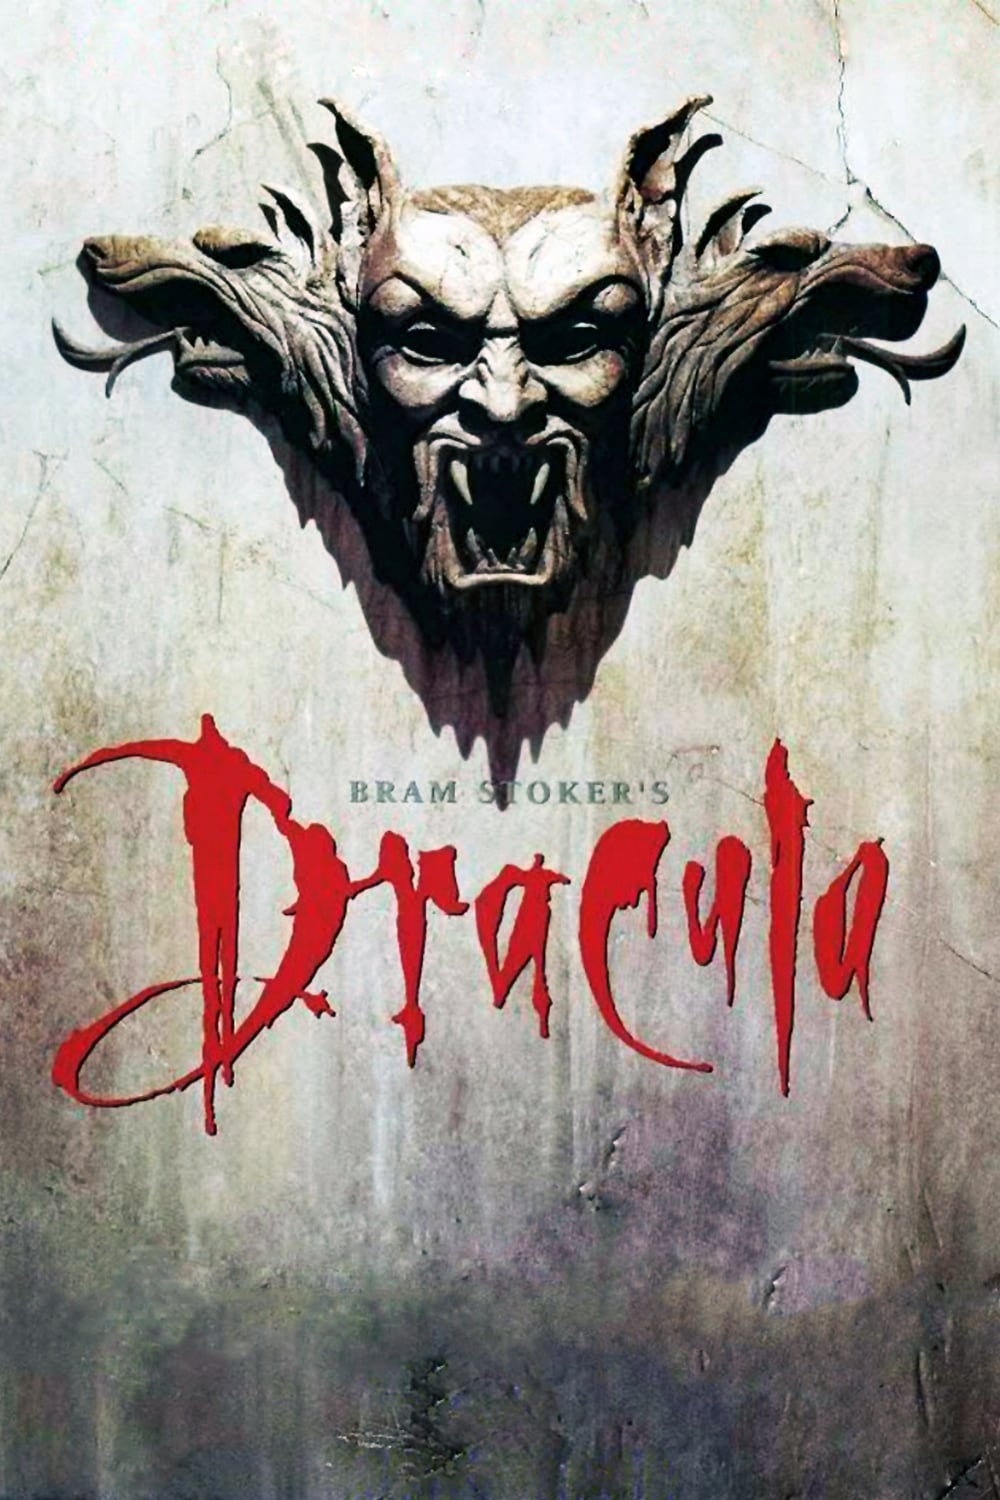 Plakat von "Bram Stoker's Dracula"